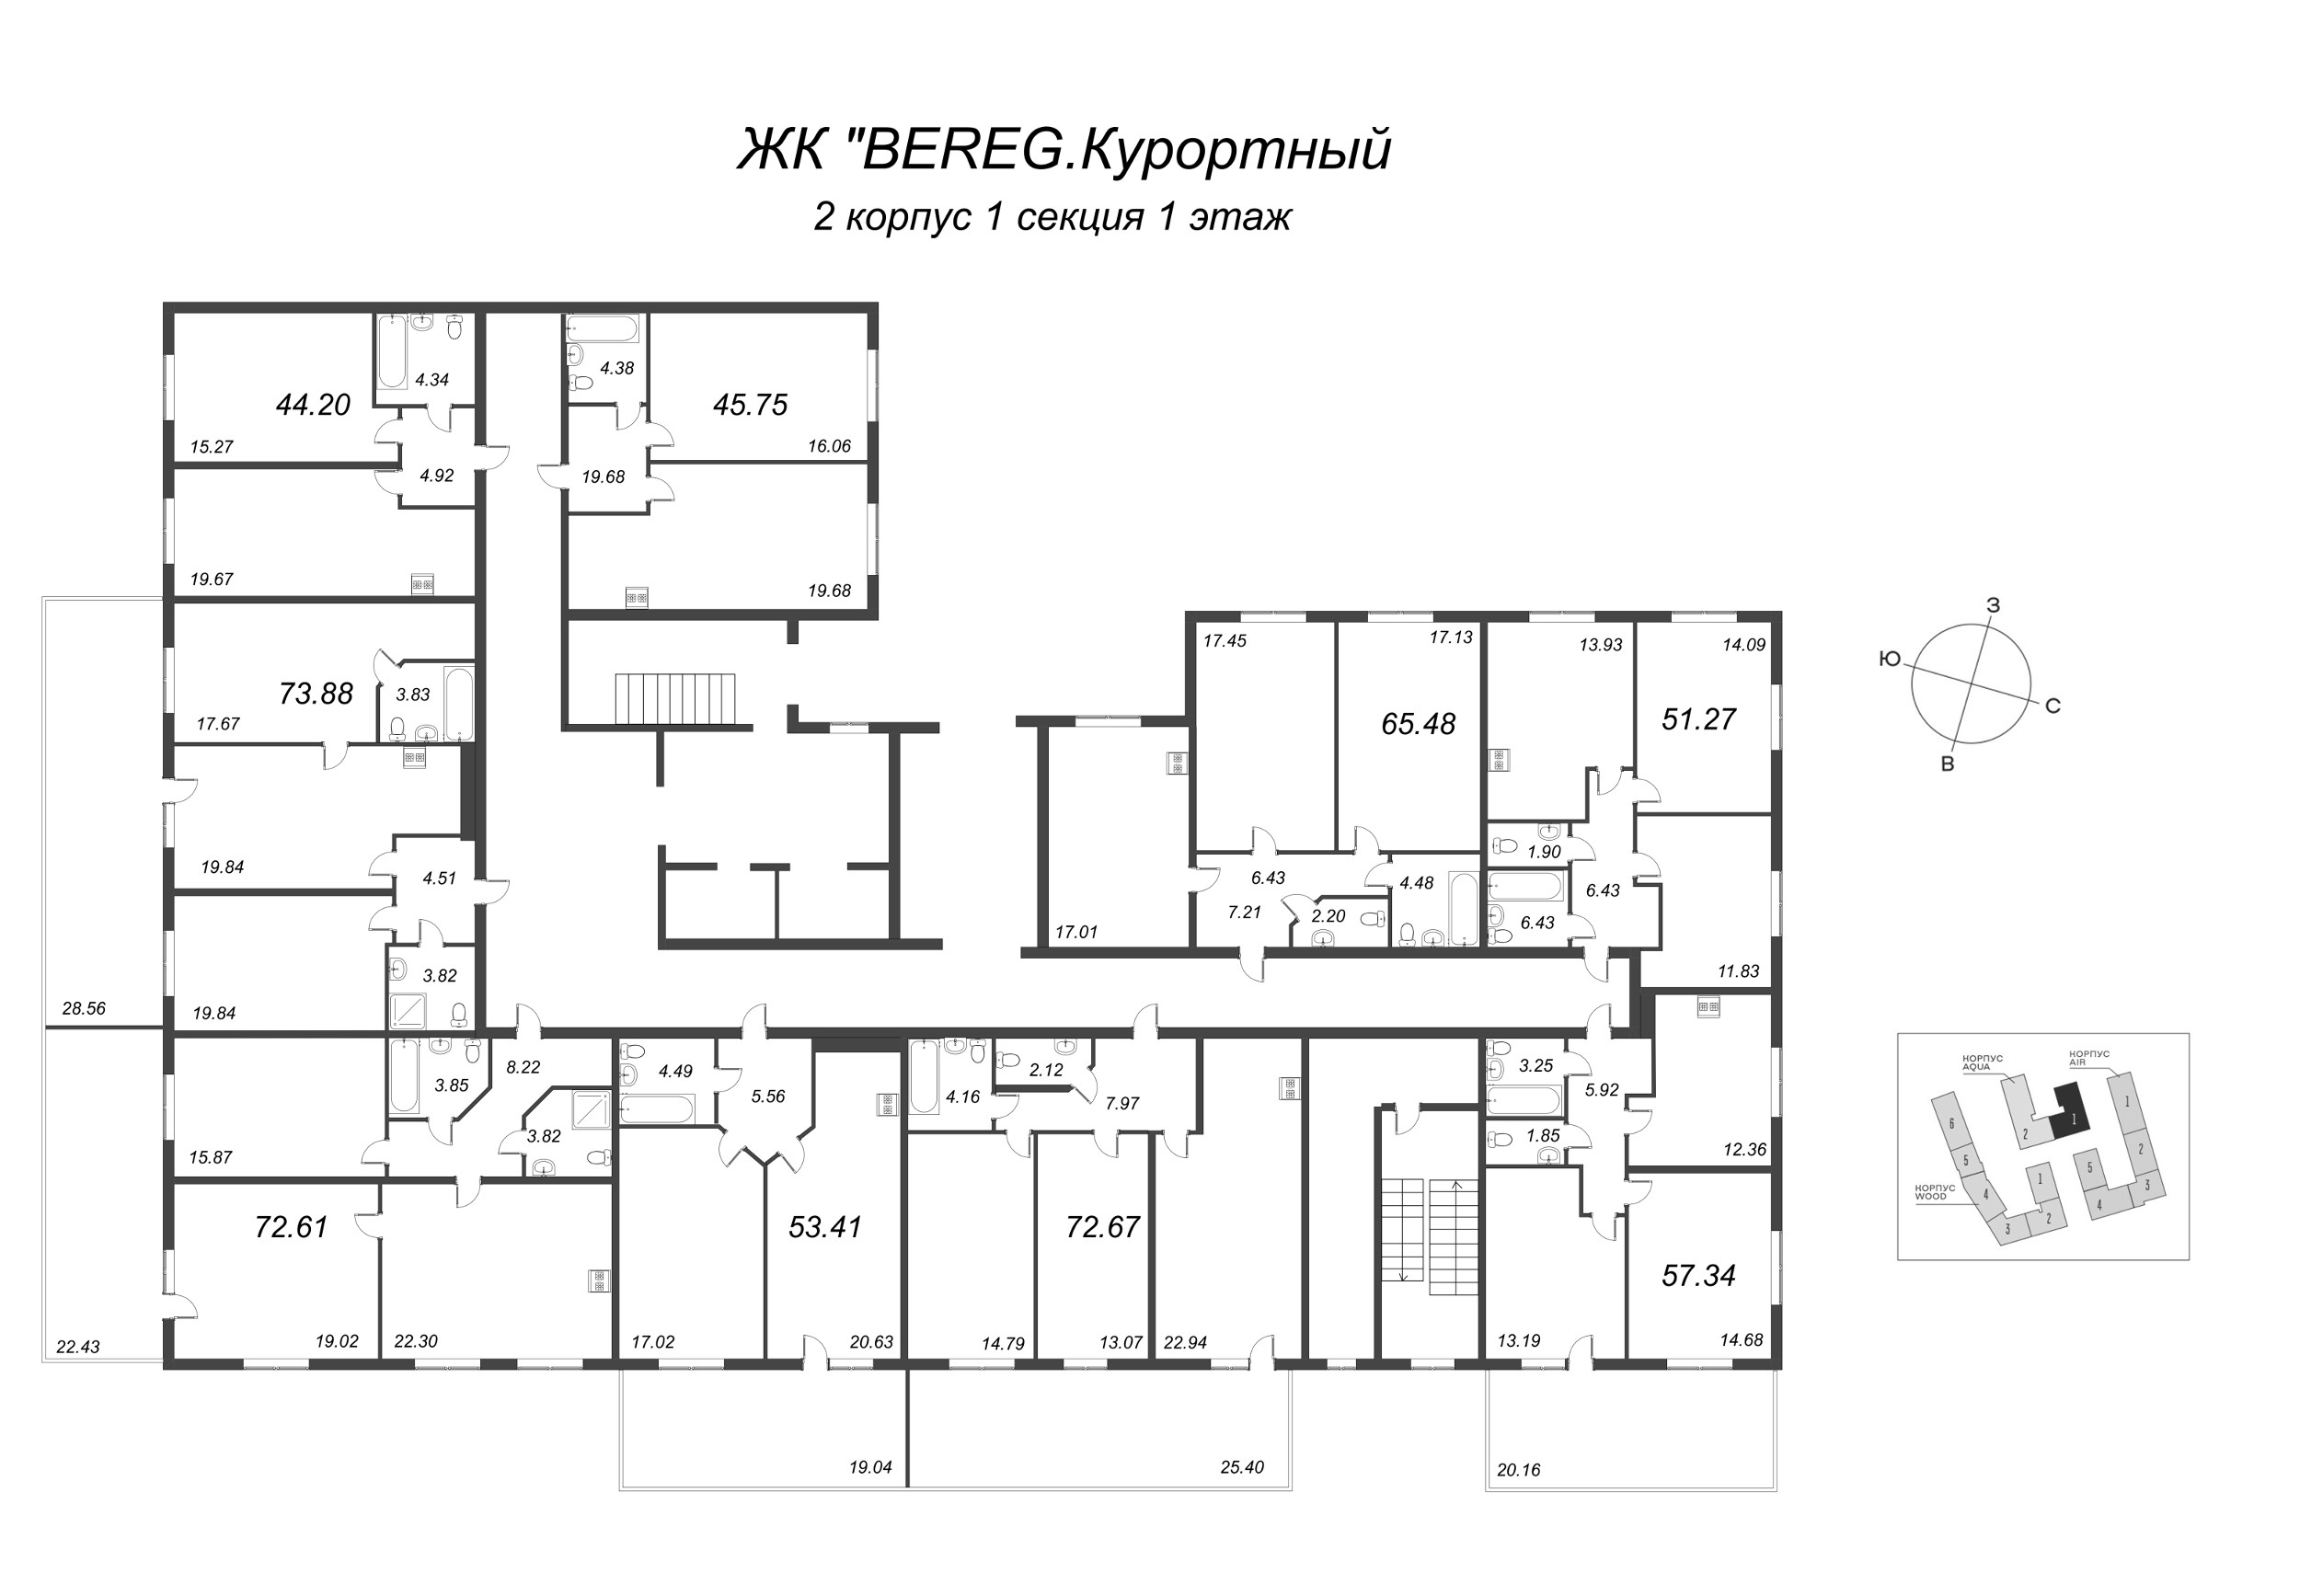 2-комнатная (Евро) квартира, 45.75 м² - планировка этажа